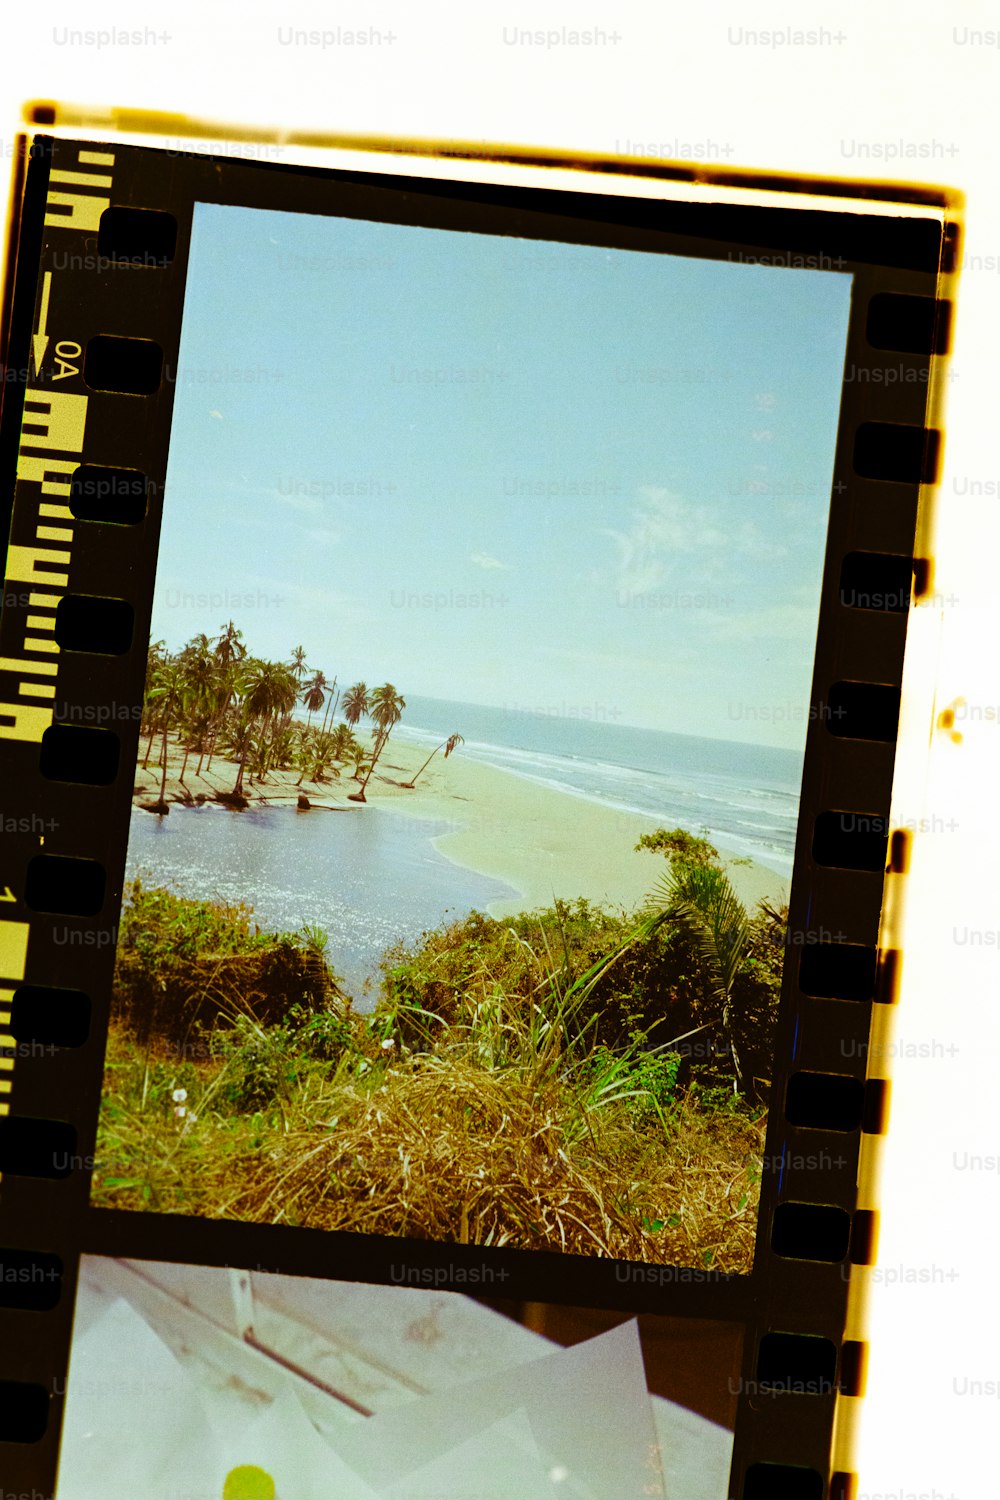 a polaroid photo of a beach and trees